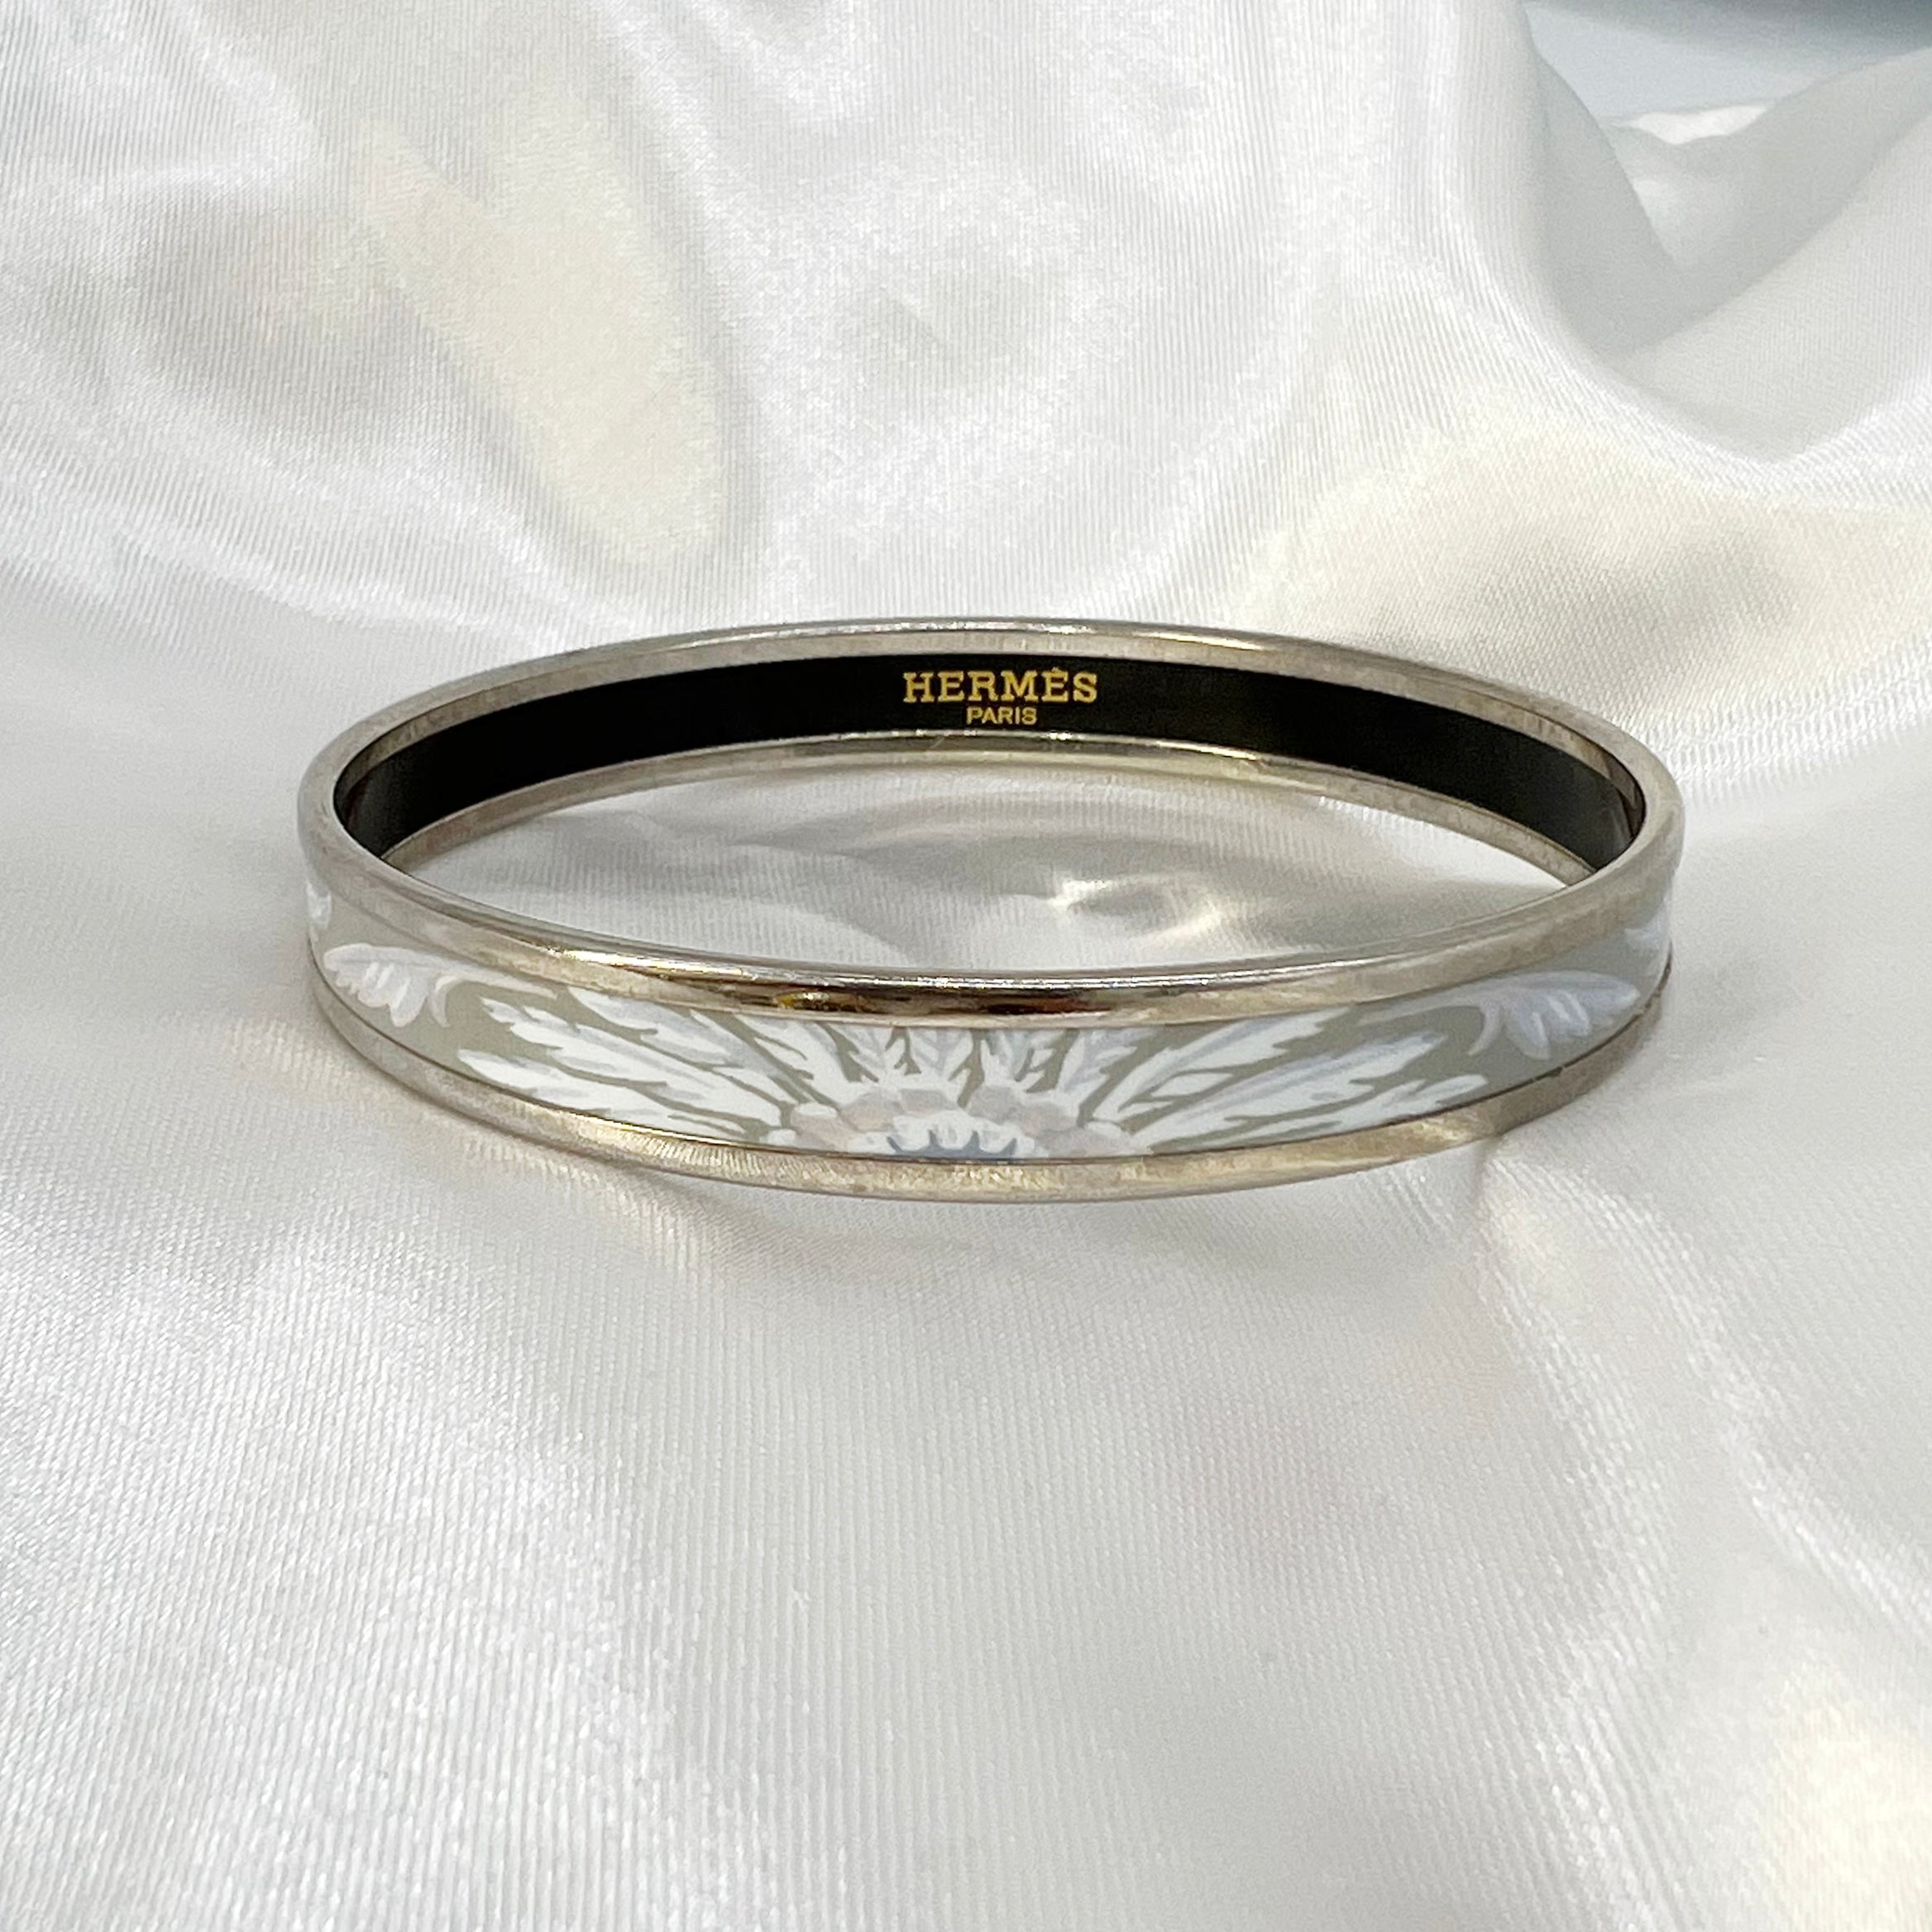 Guaranteed Authentic HERMÈS Brazil Narrow Enamel Bangle Bracelet Palladium-Plated